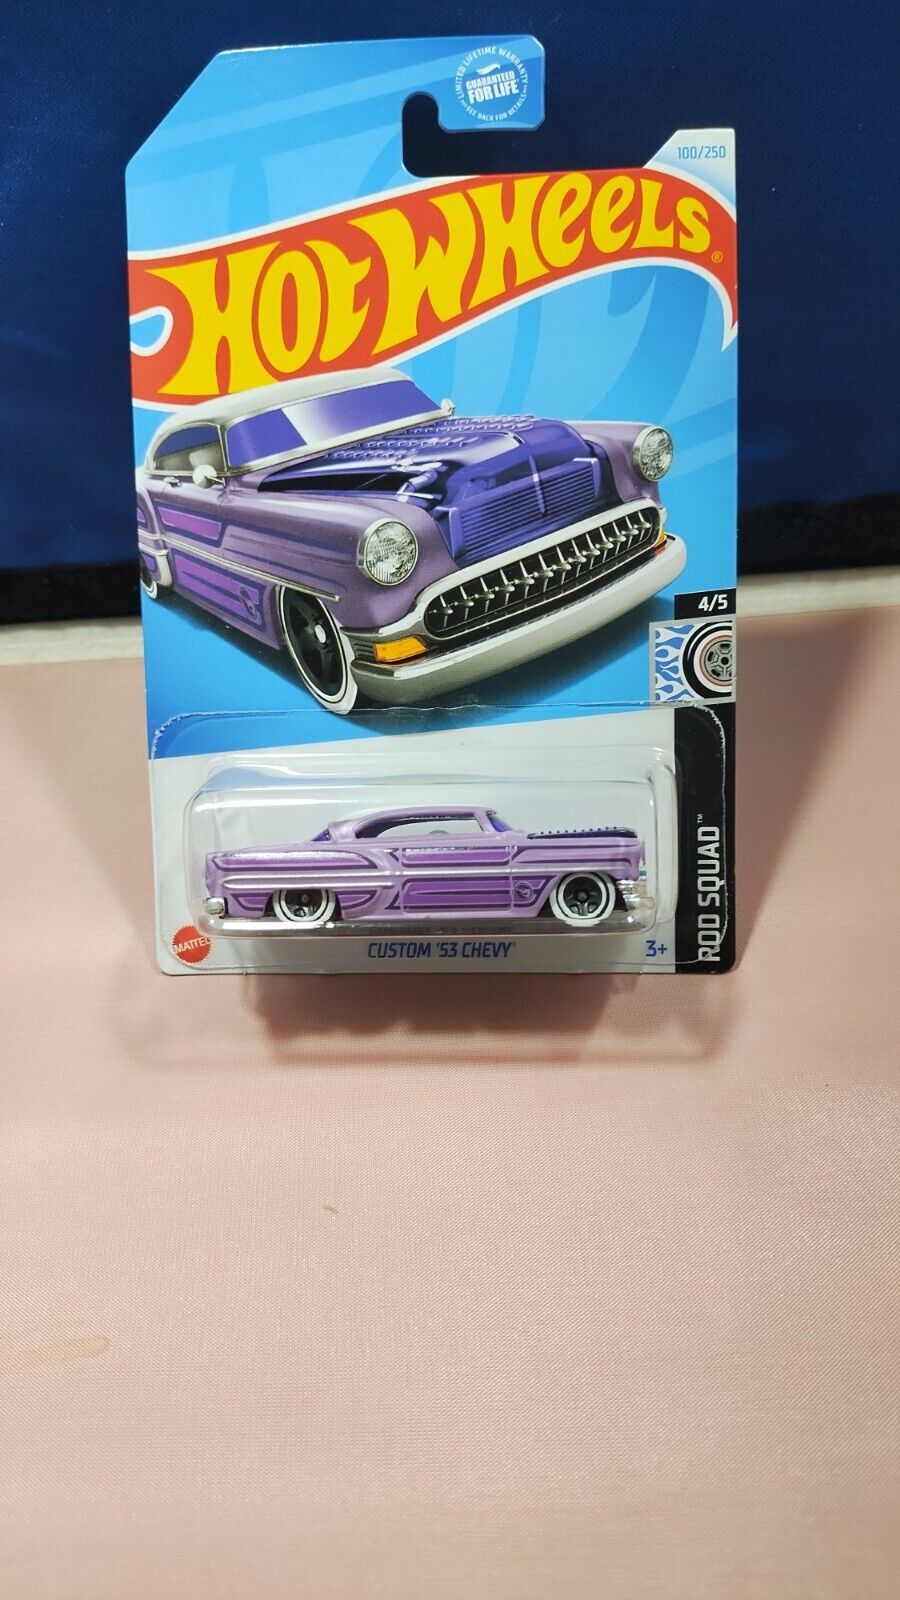 Hot Wheels Custom '53 Chevy Rod Squad Series #4/5 Purple Diecast 1:64 Scale New